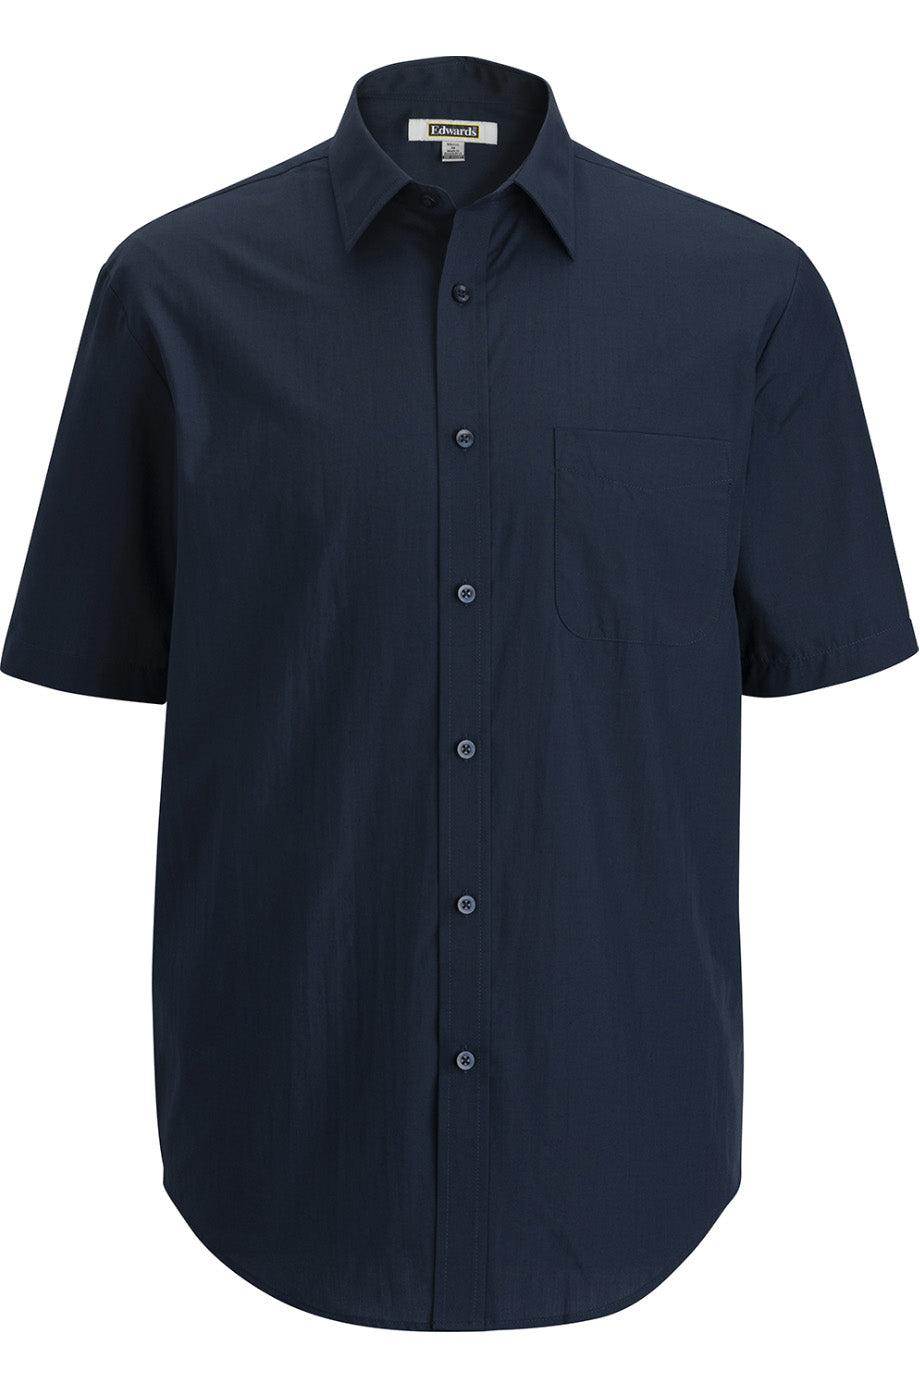 Men's Essential Broadcloth Shirt - Navy